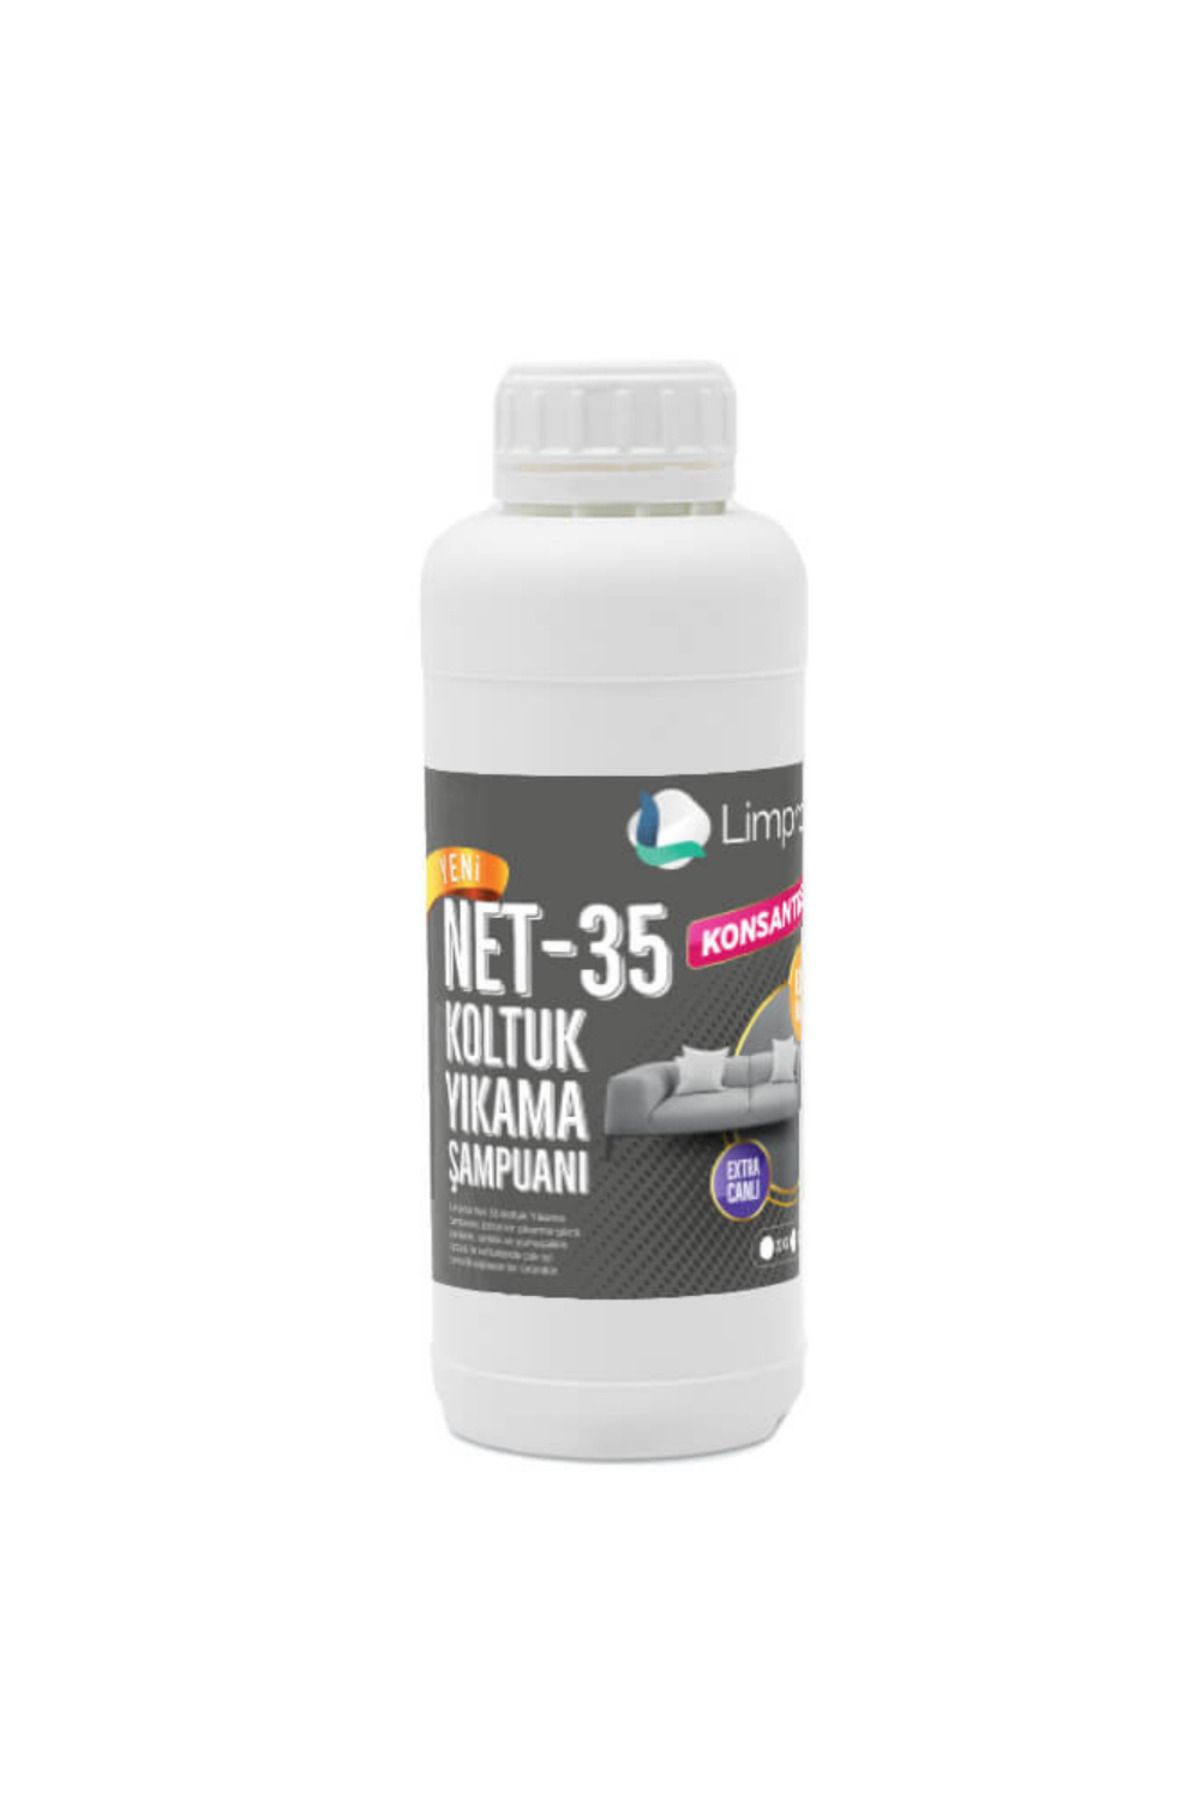 Limprox Net-35 Koltuk Yıkama Şampuanı İlacı - 1 Litre